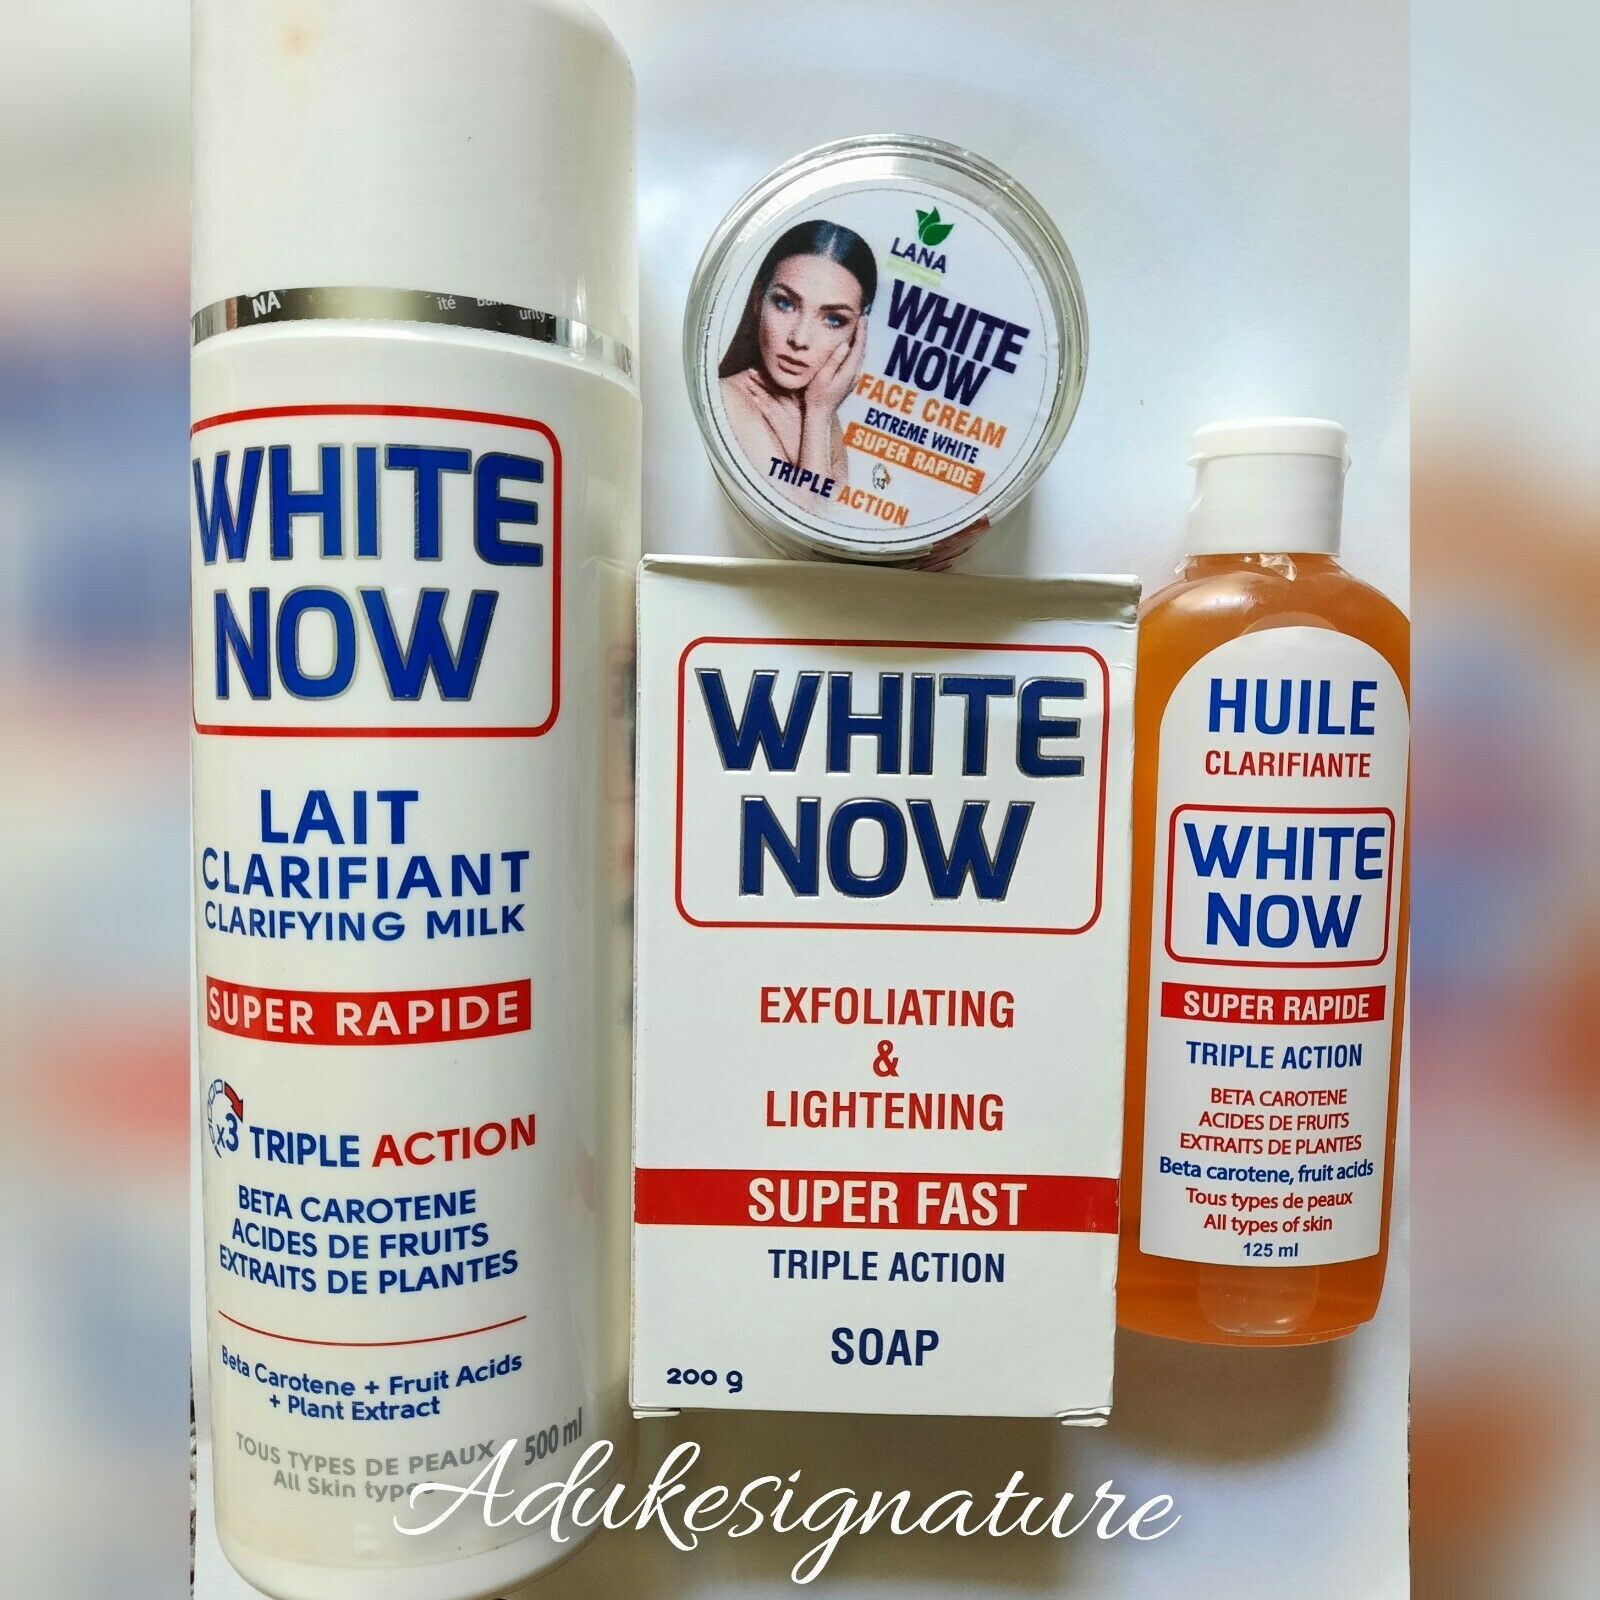 4 in 1:White Now Whitening Body Lotion 500ml + Oil + Soap 200g + Face cream - $83.99